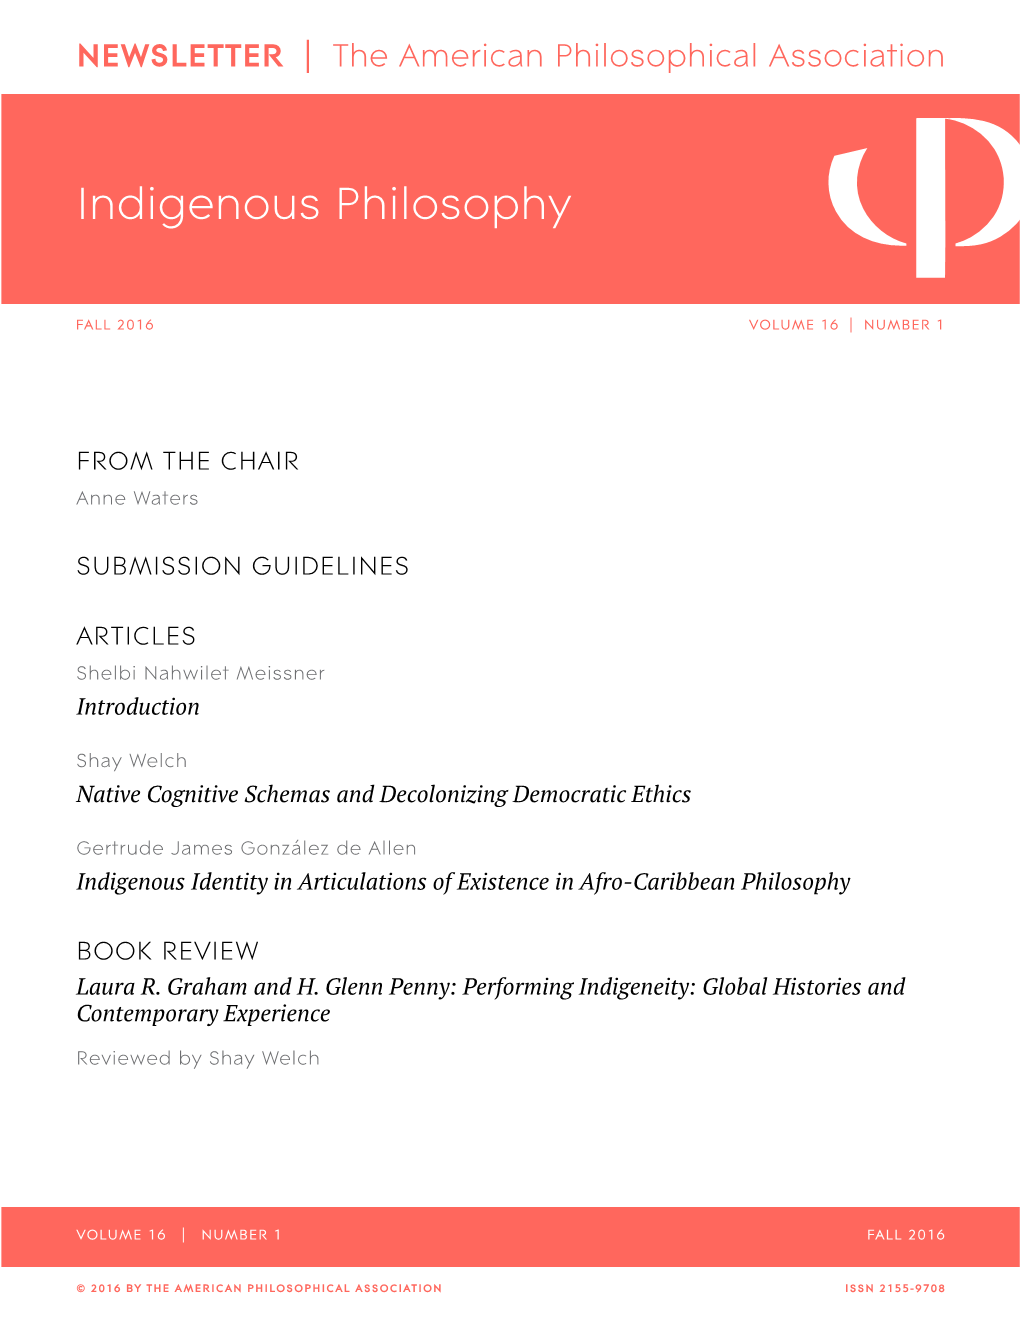 Indigenous Philosophy Vol. 16, No. 1